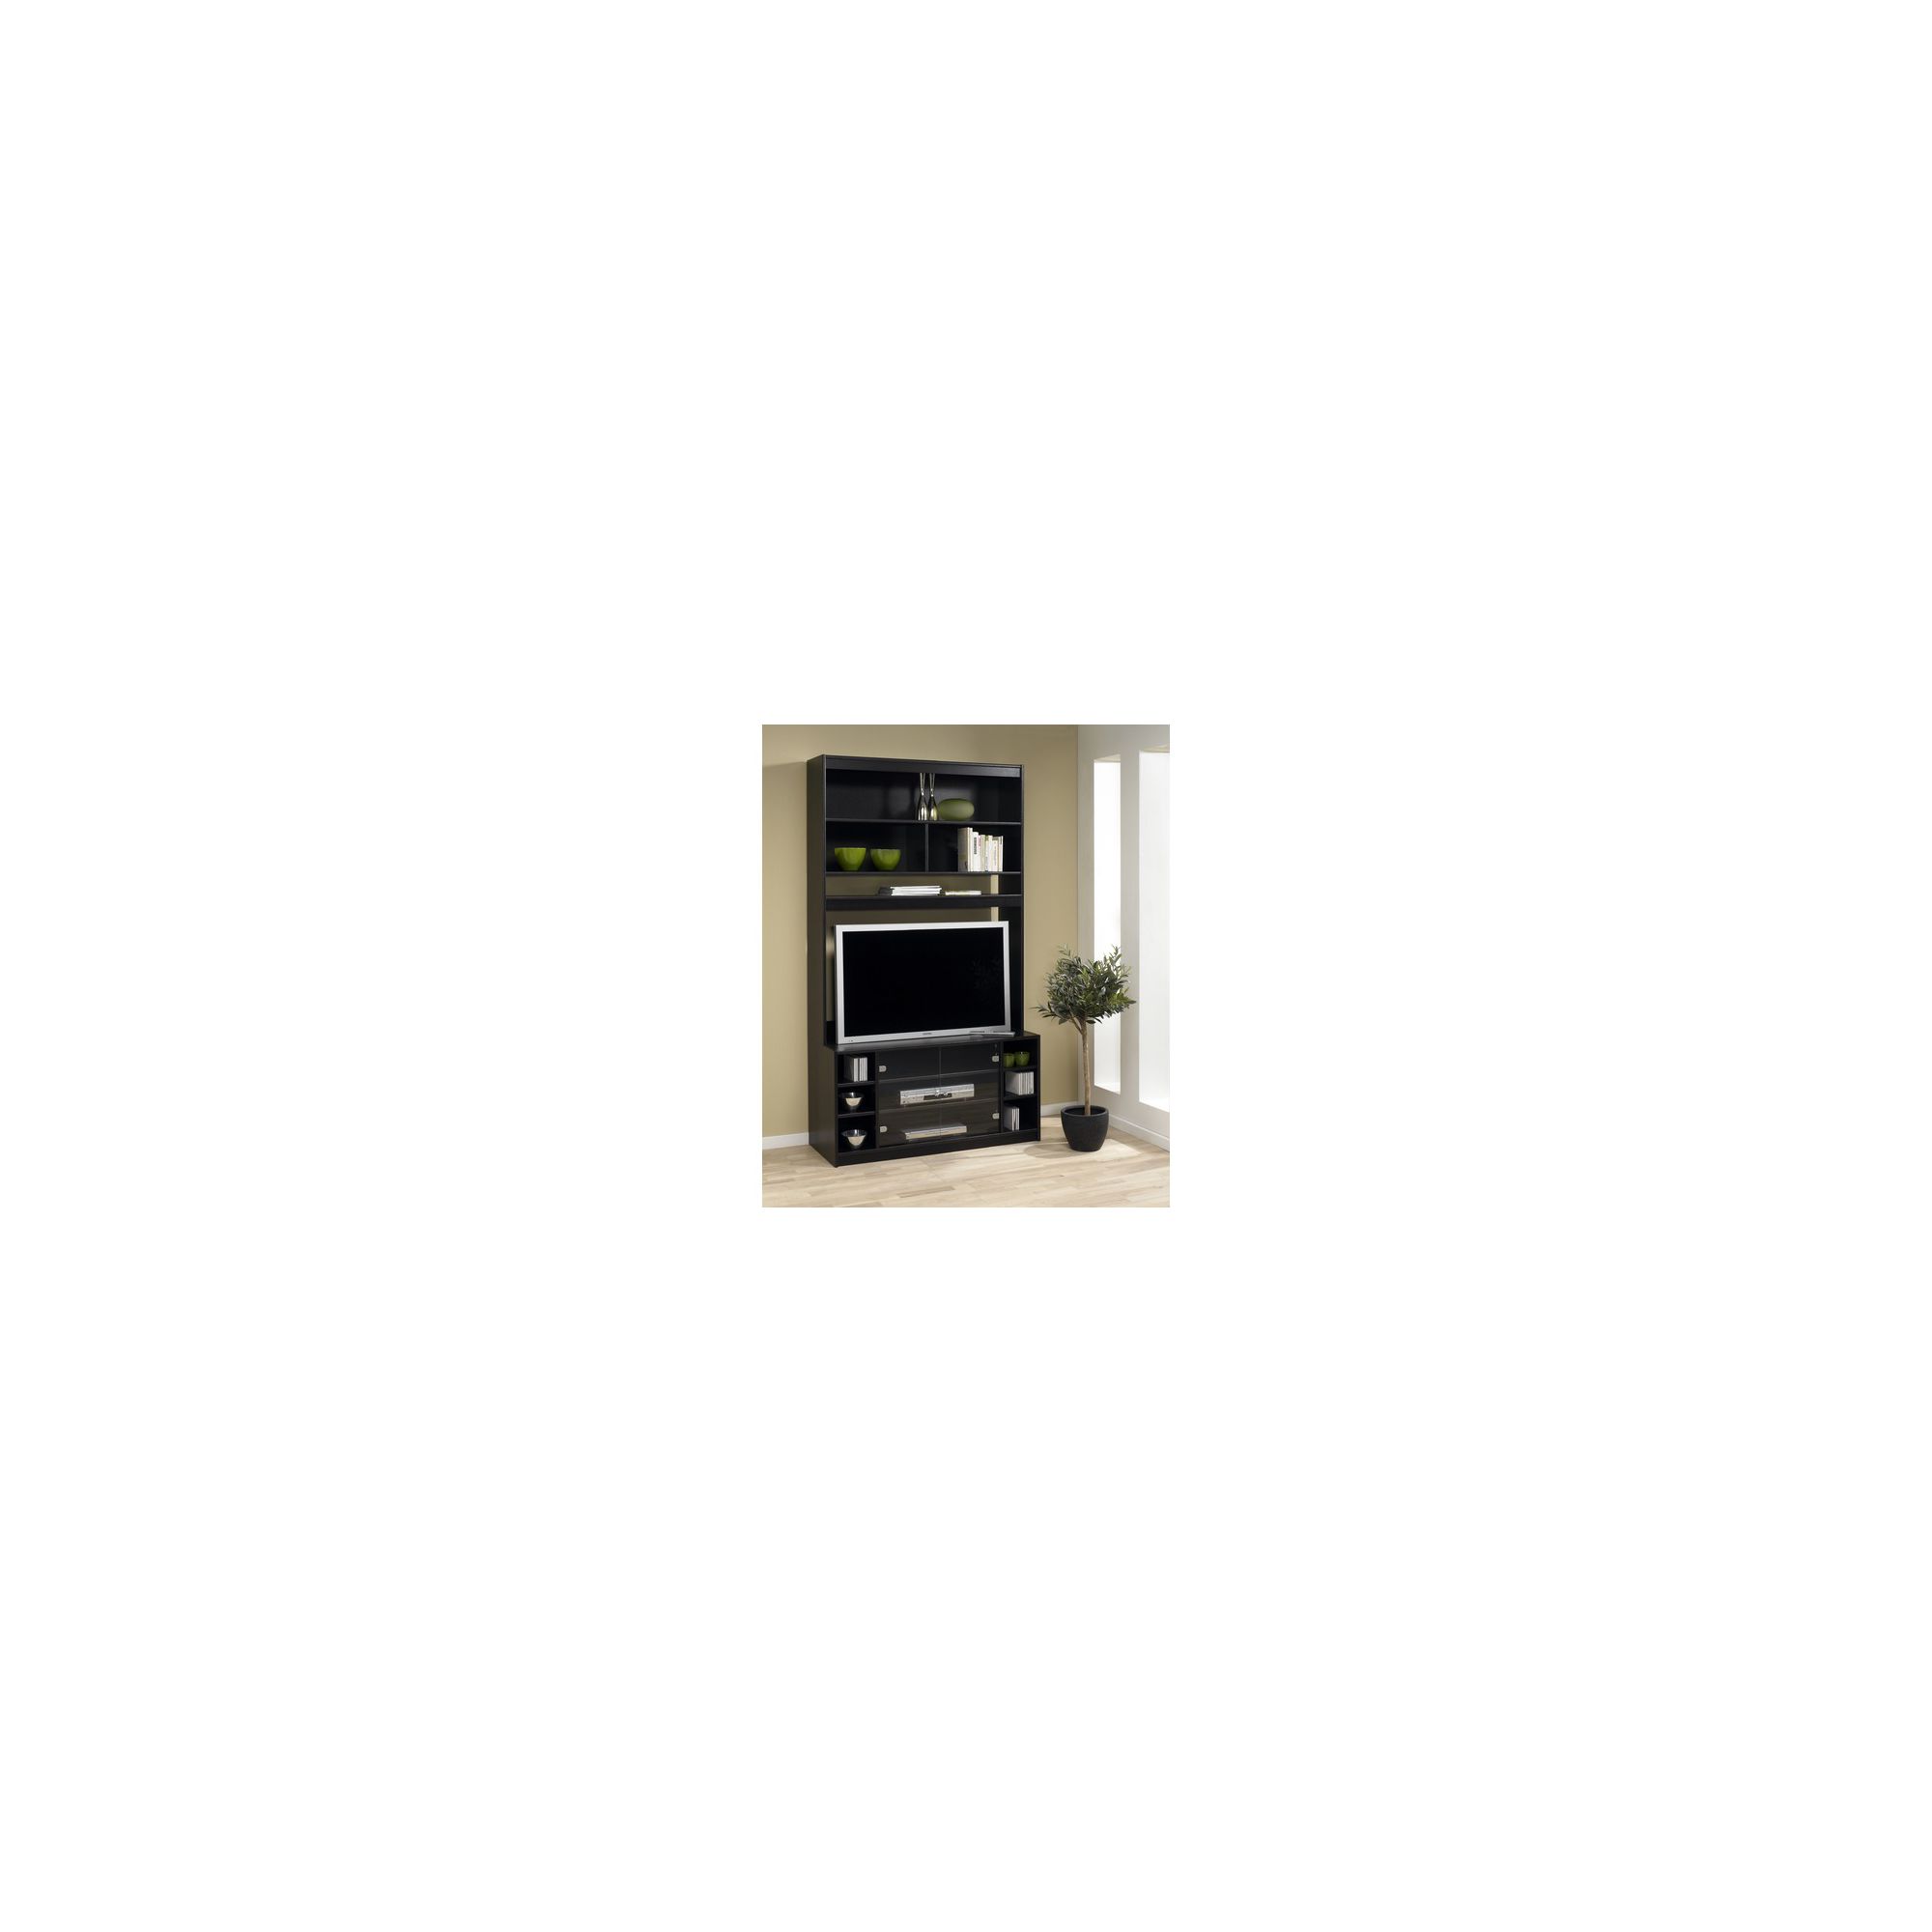 Tvilum Classic Soft Wooden TV Cabinet - Oak at Tesco Direct